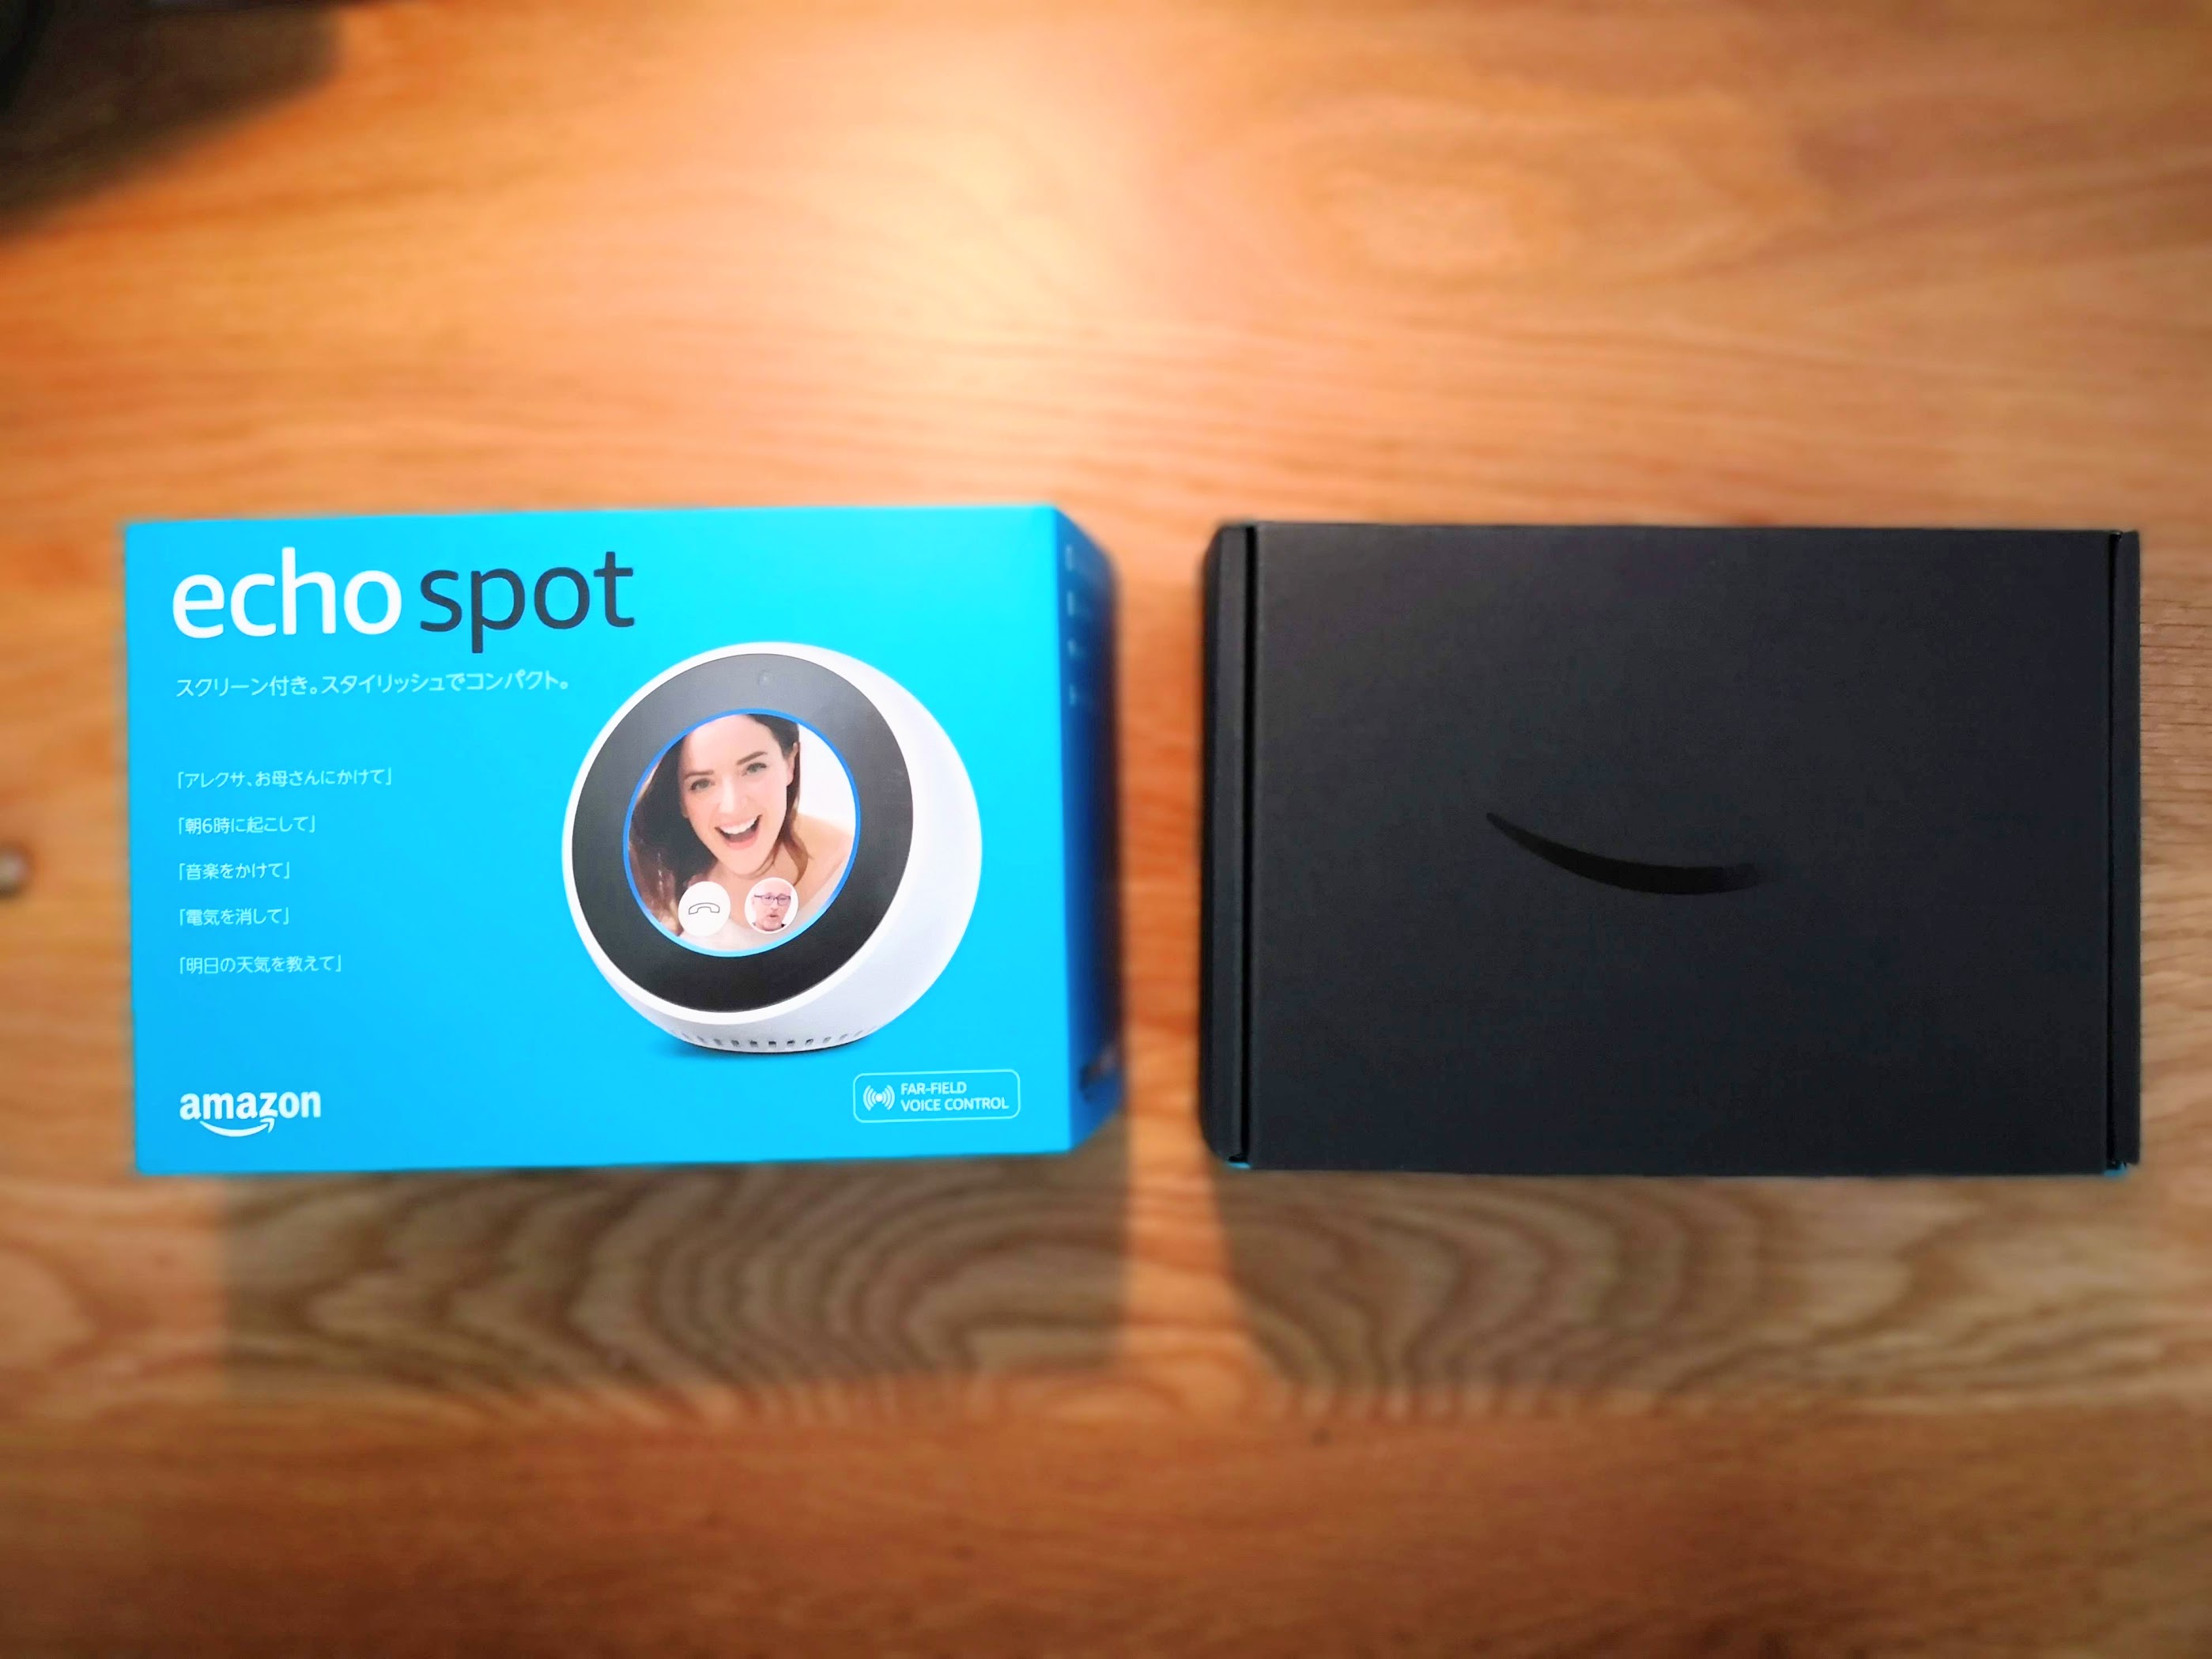 Amazon Echo Spotの外箱、内箱を並べた様子